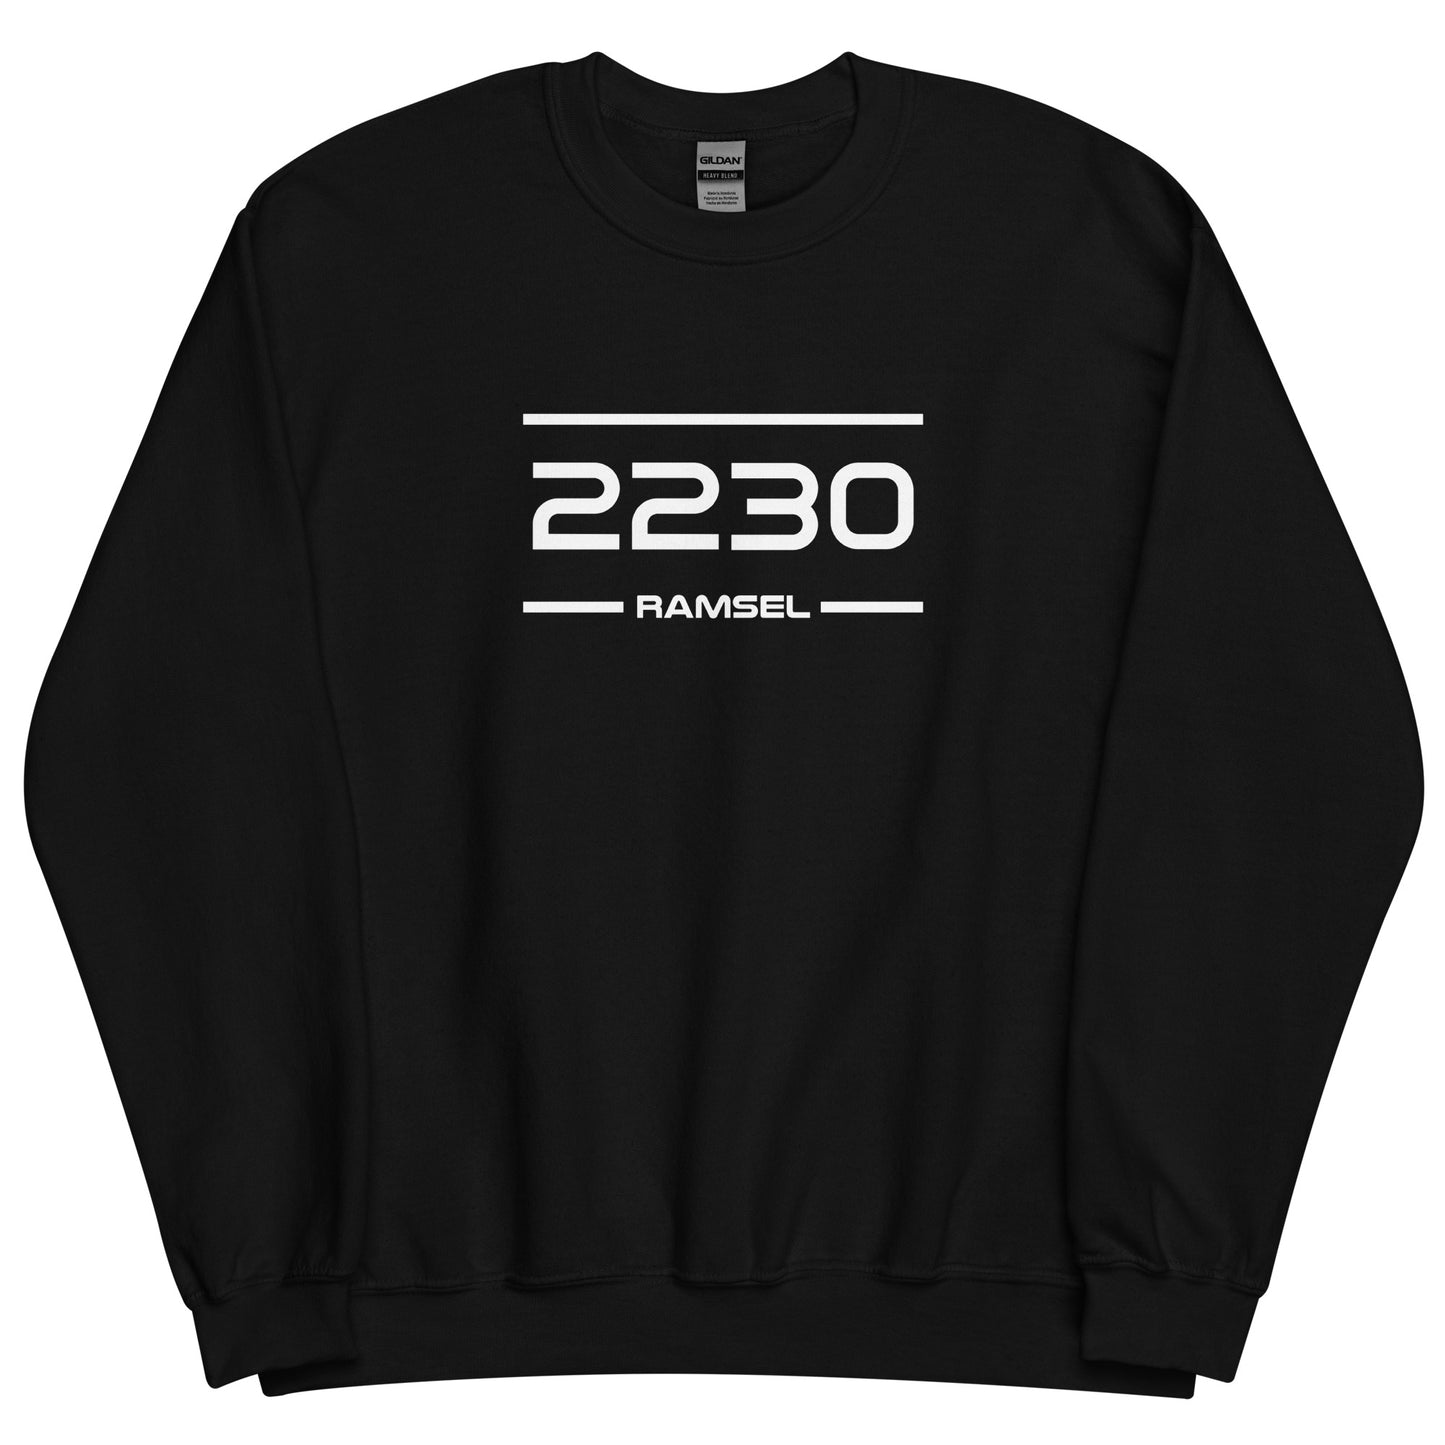 Sweater - 2230 - Ramsel (M/V)